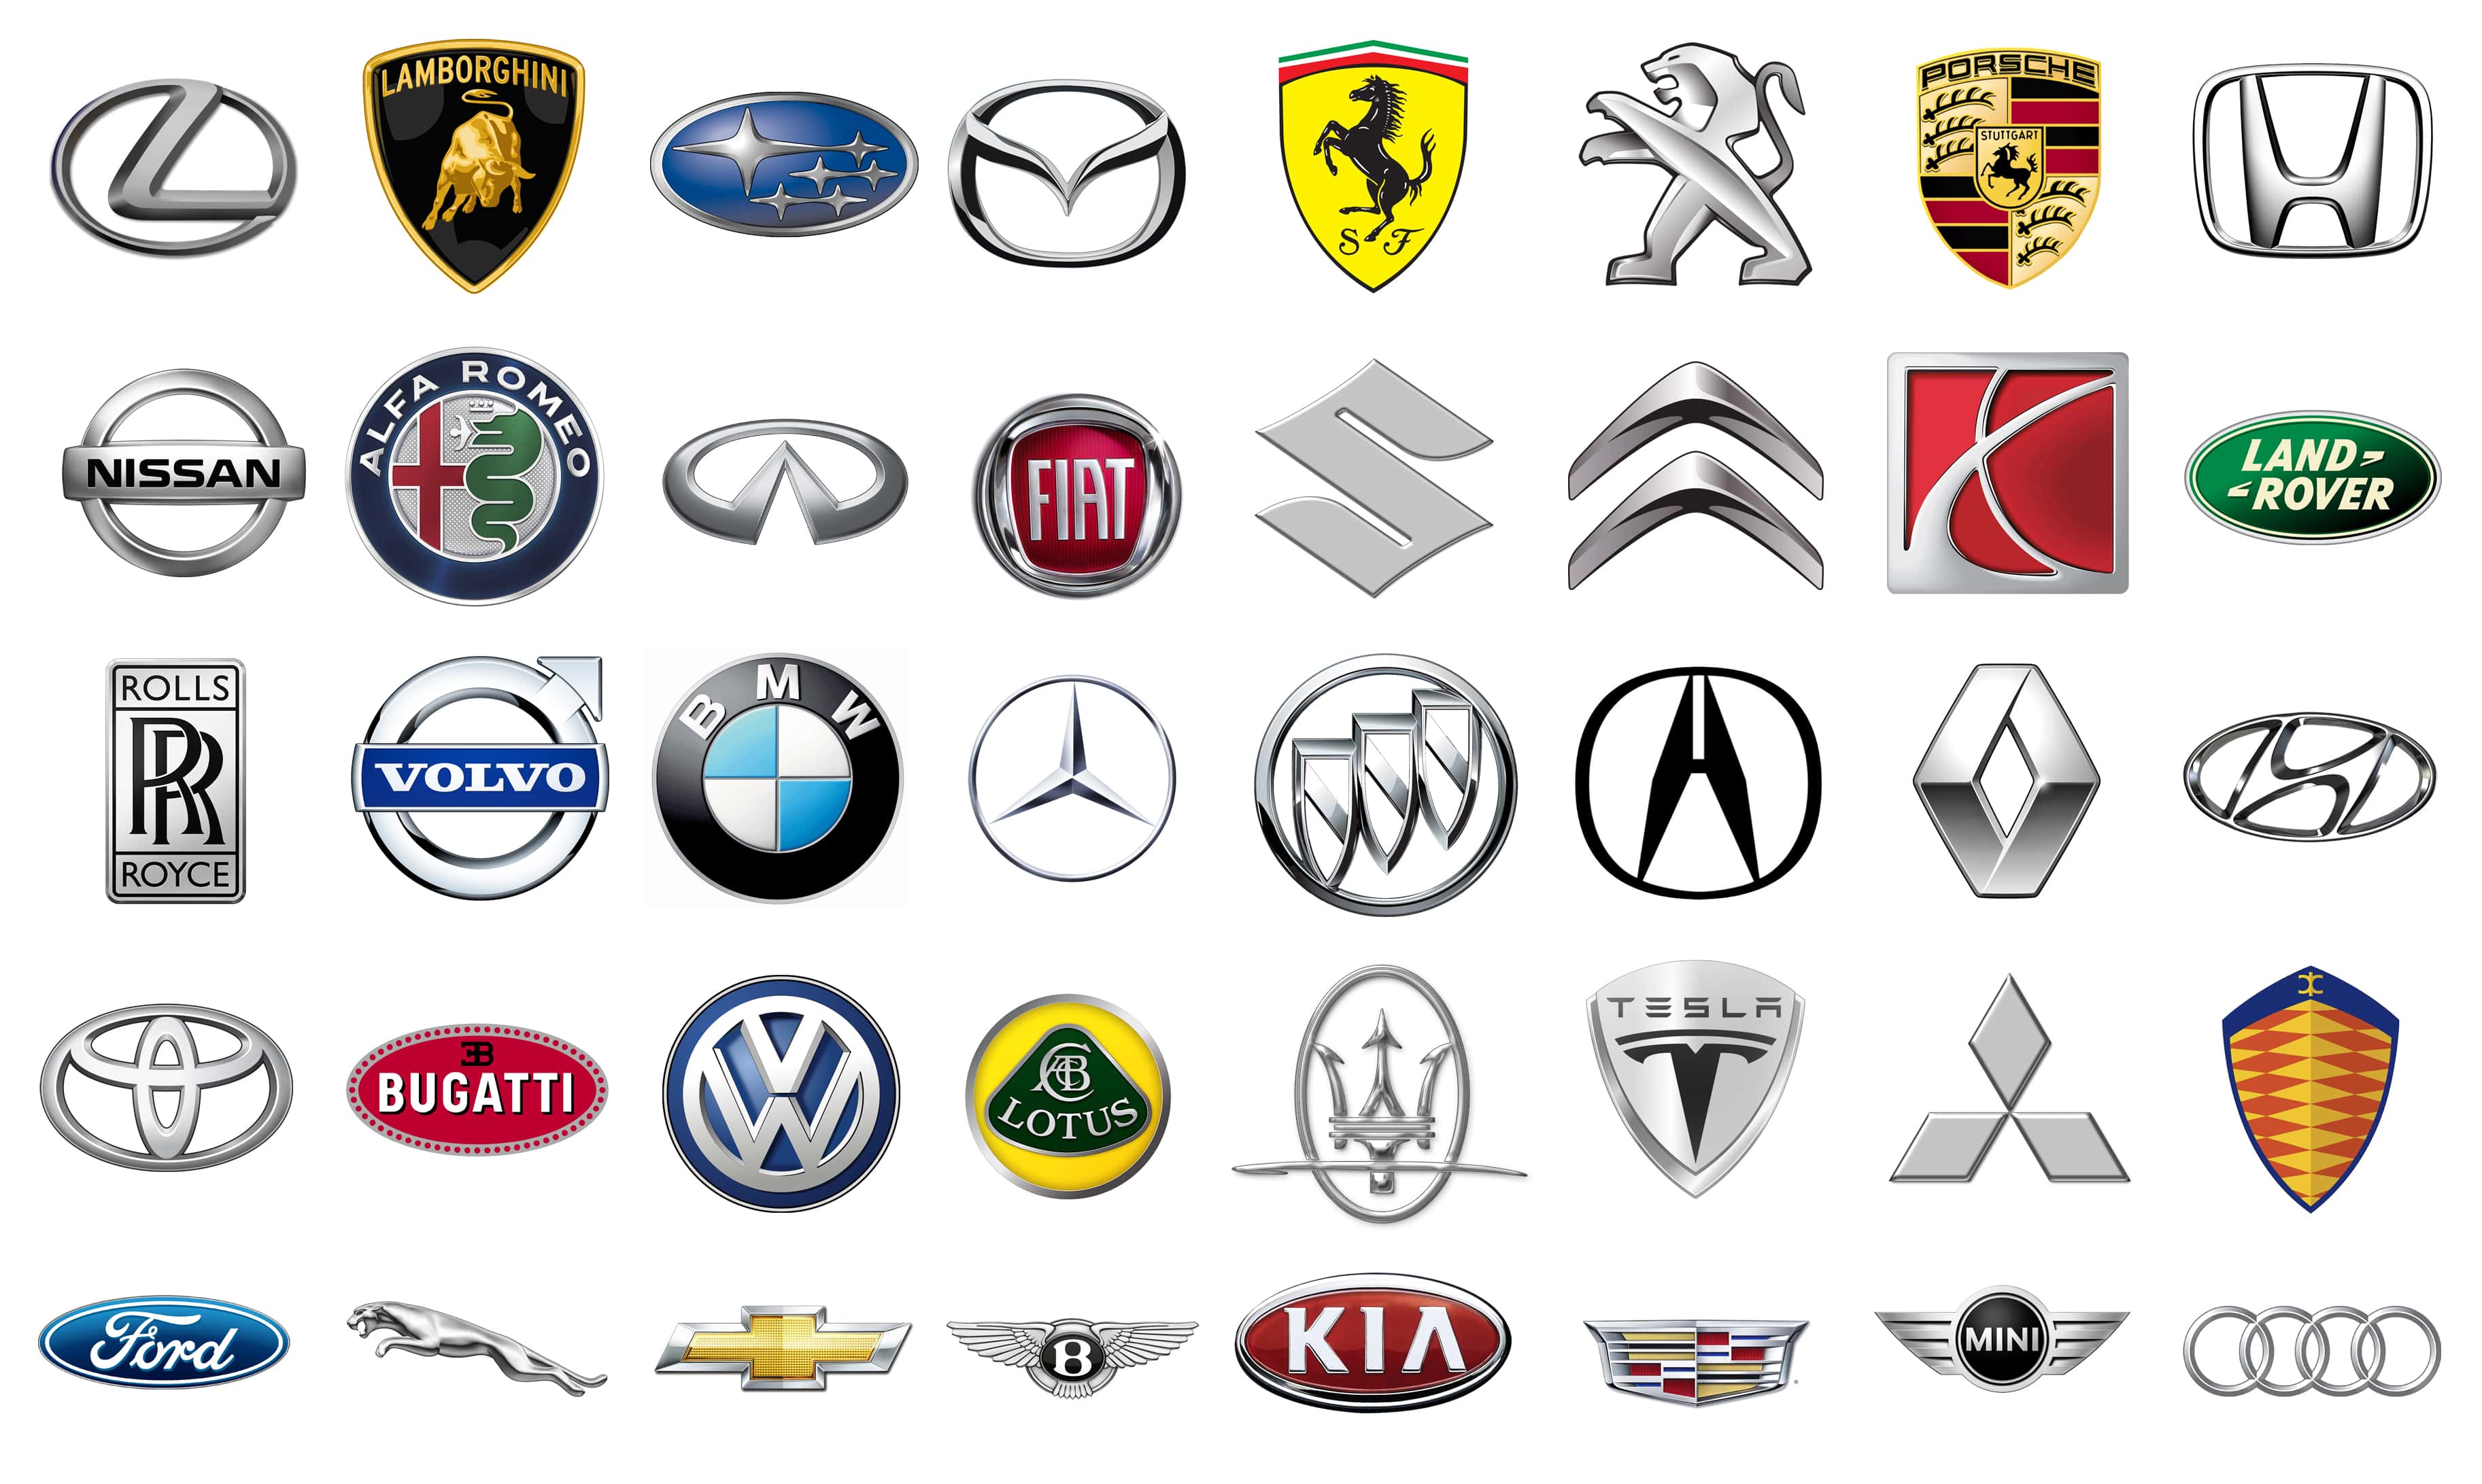 World car brands, car symbols and emblems